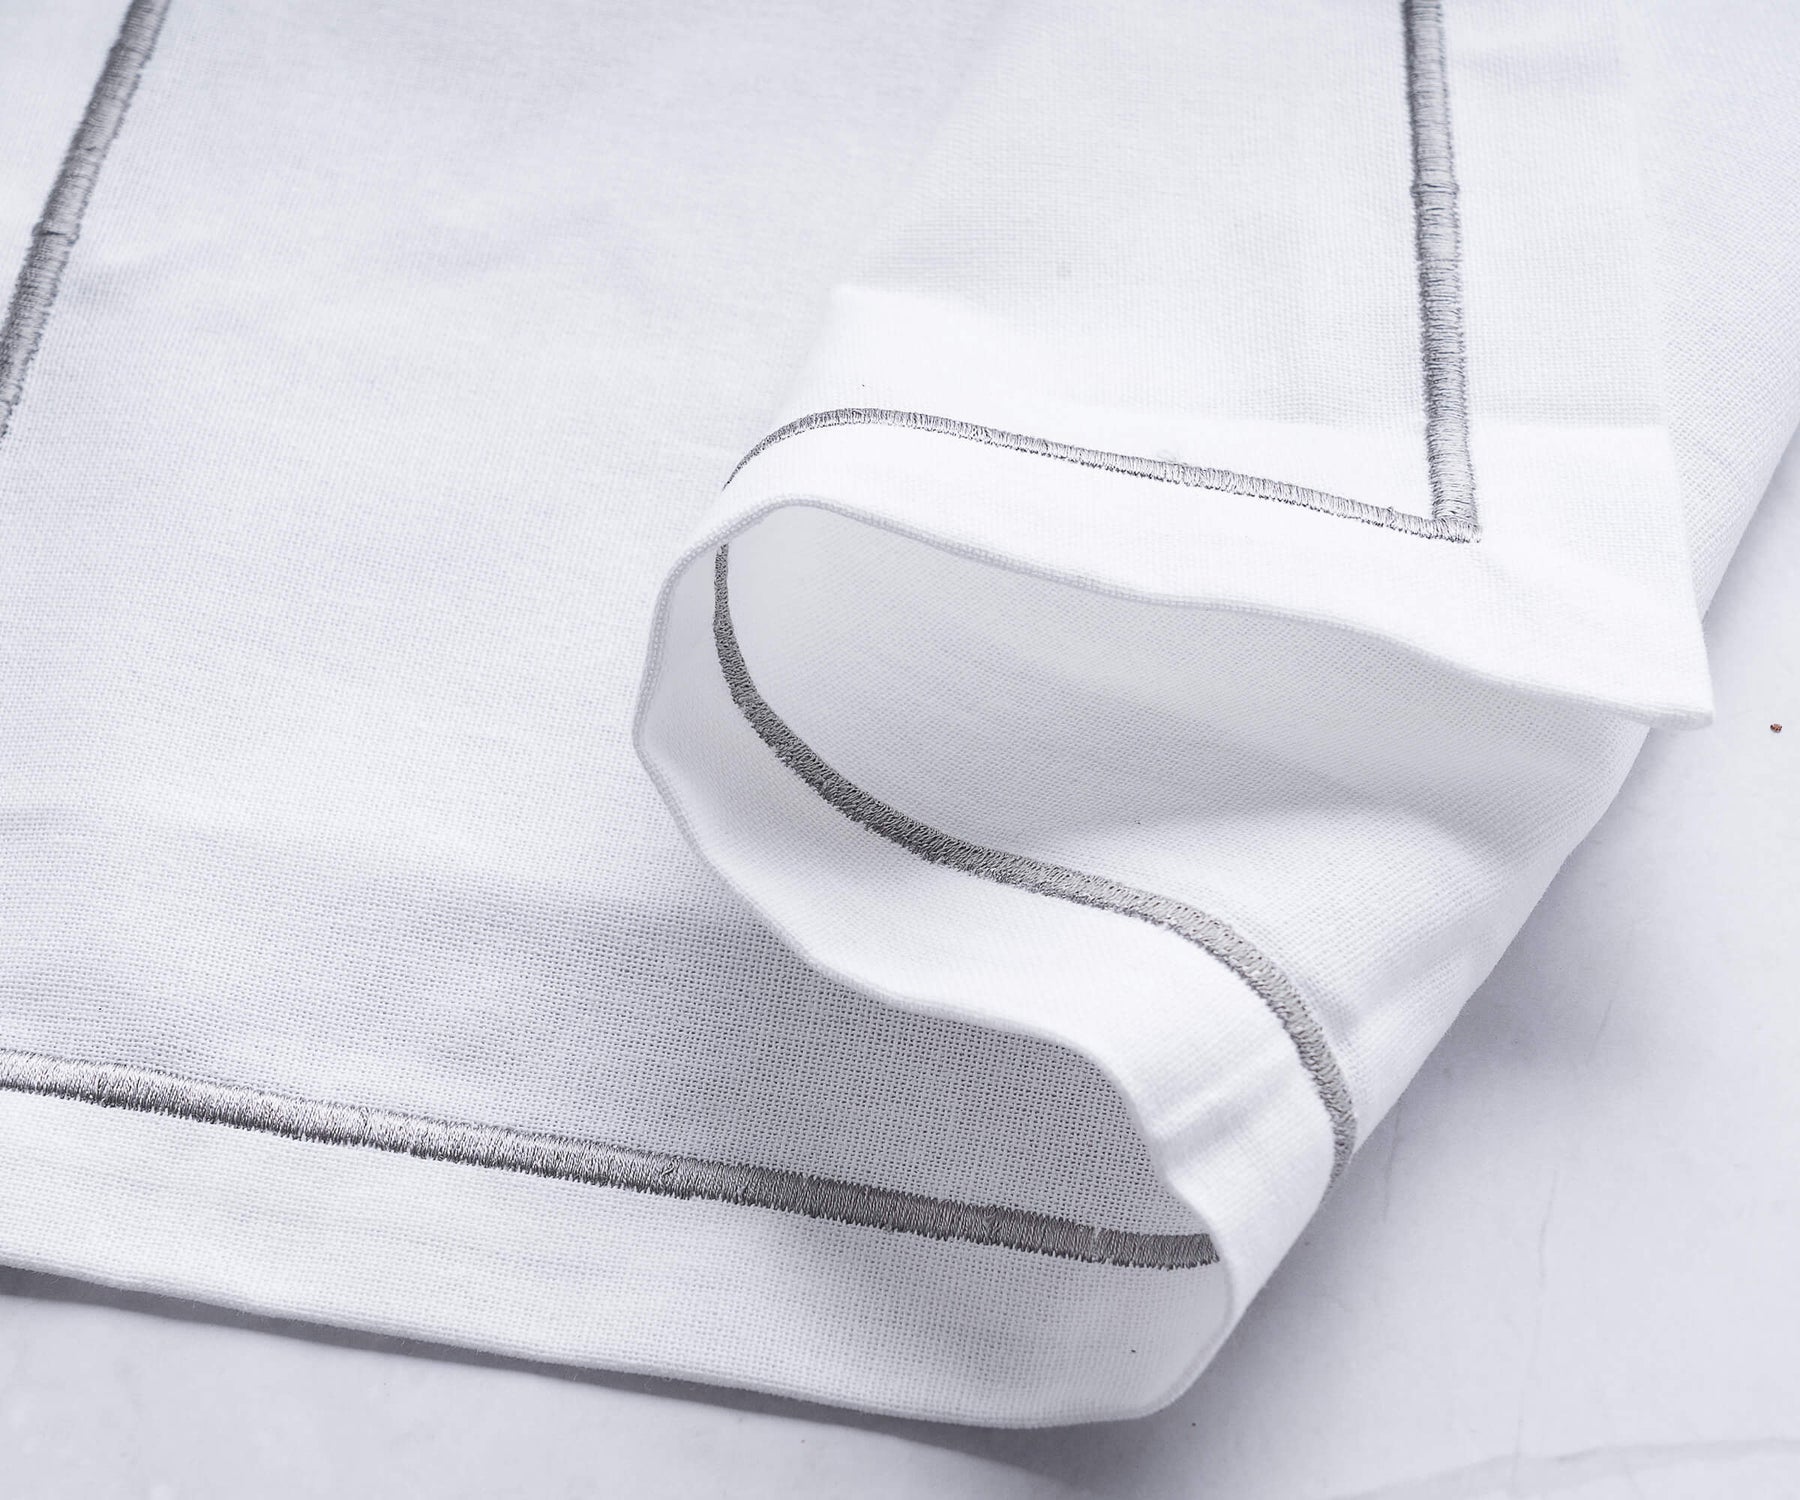 White linen napkin with silver trim detail